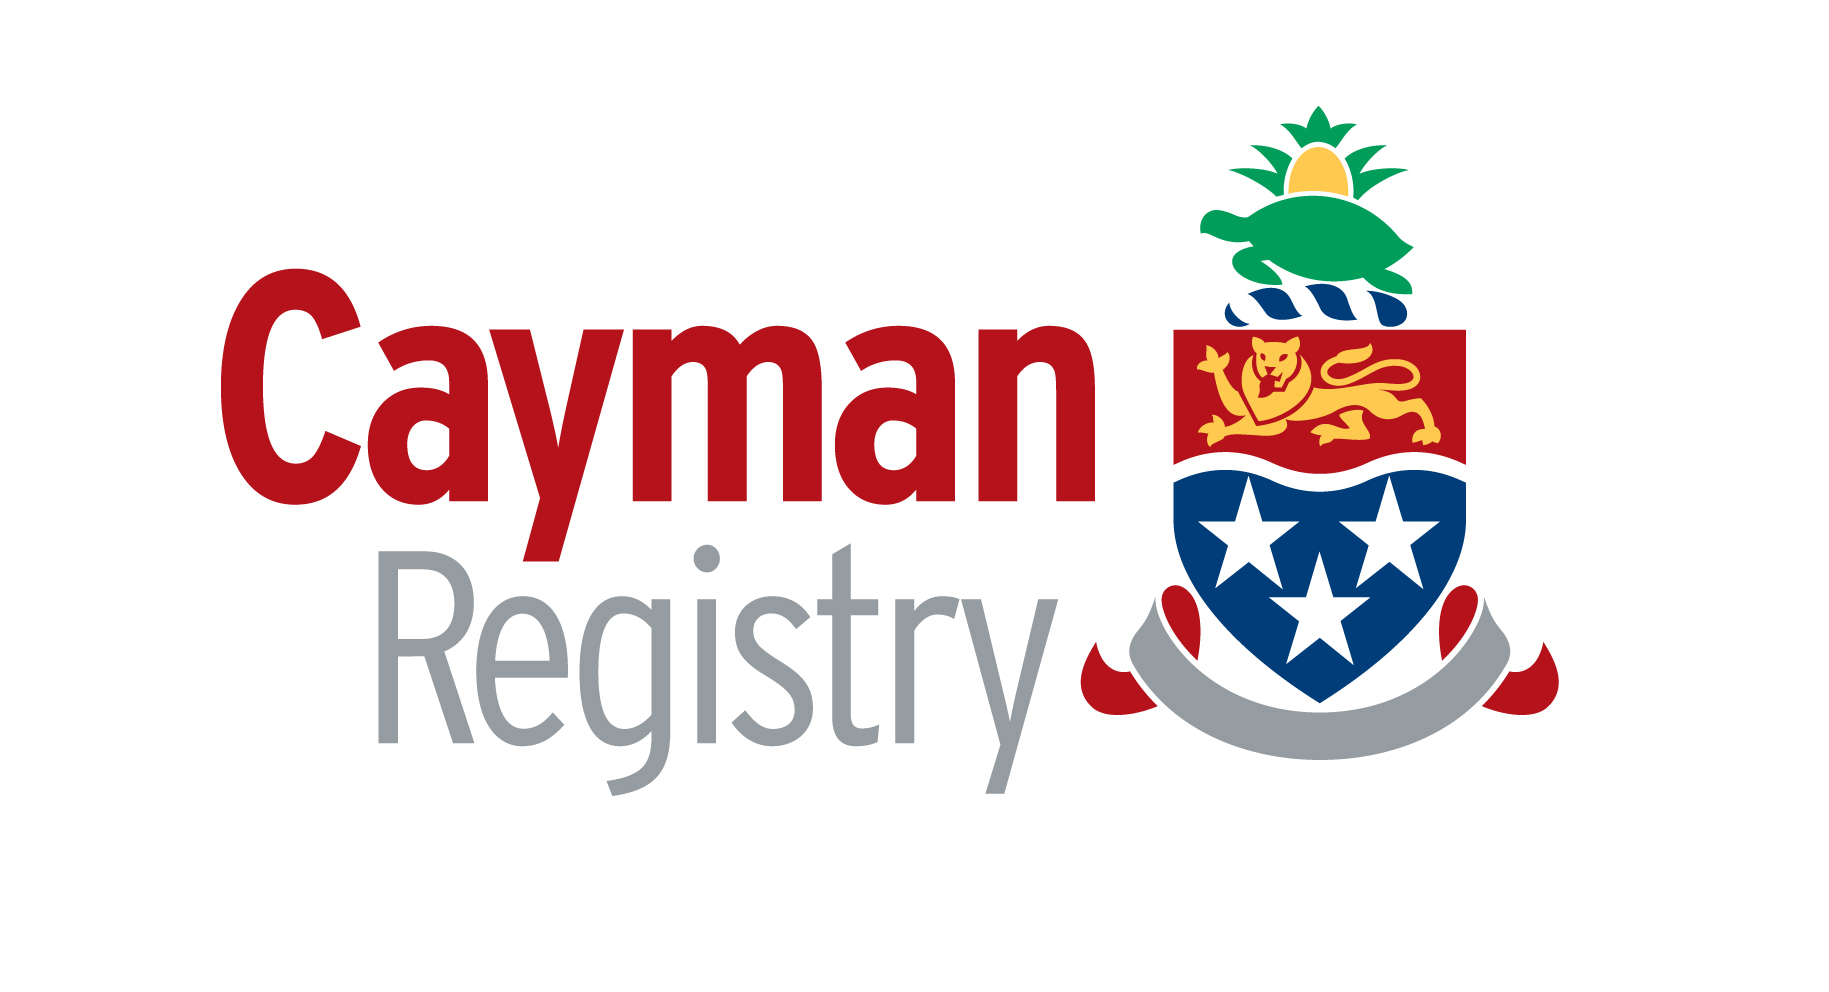 Cayman Island Registry